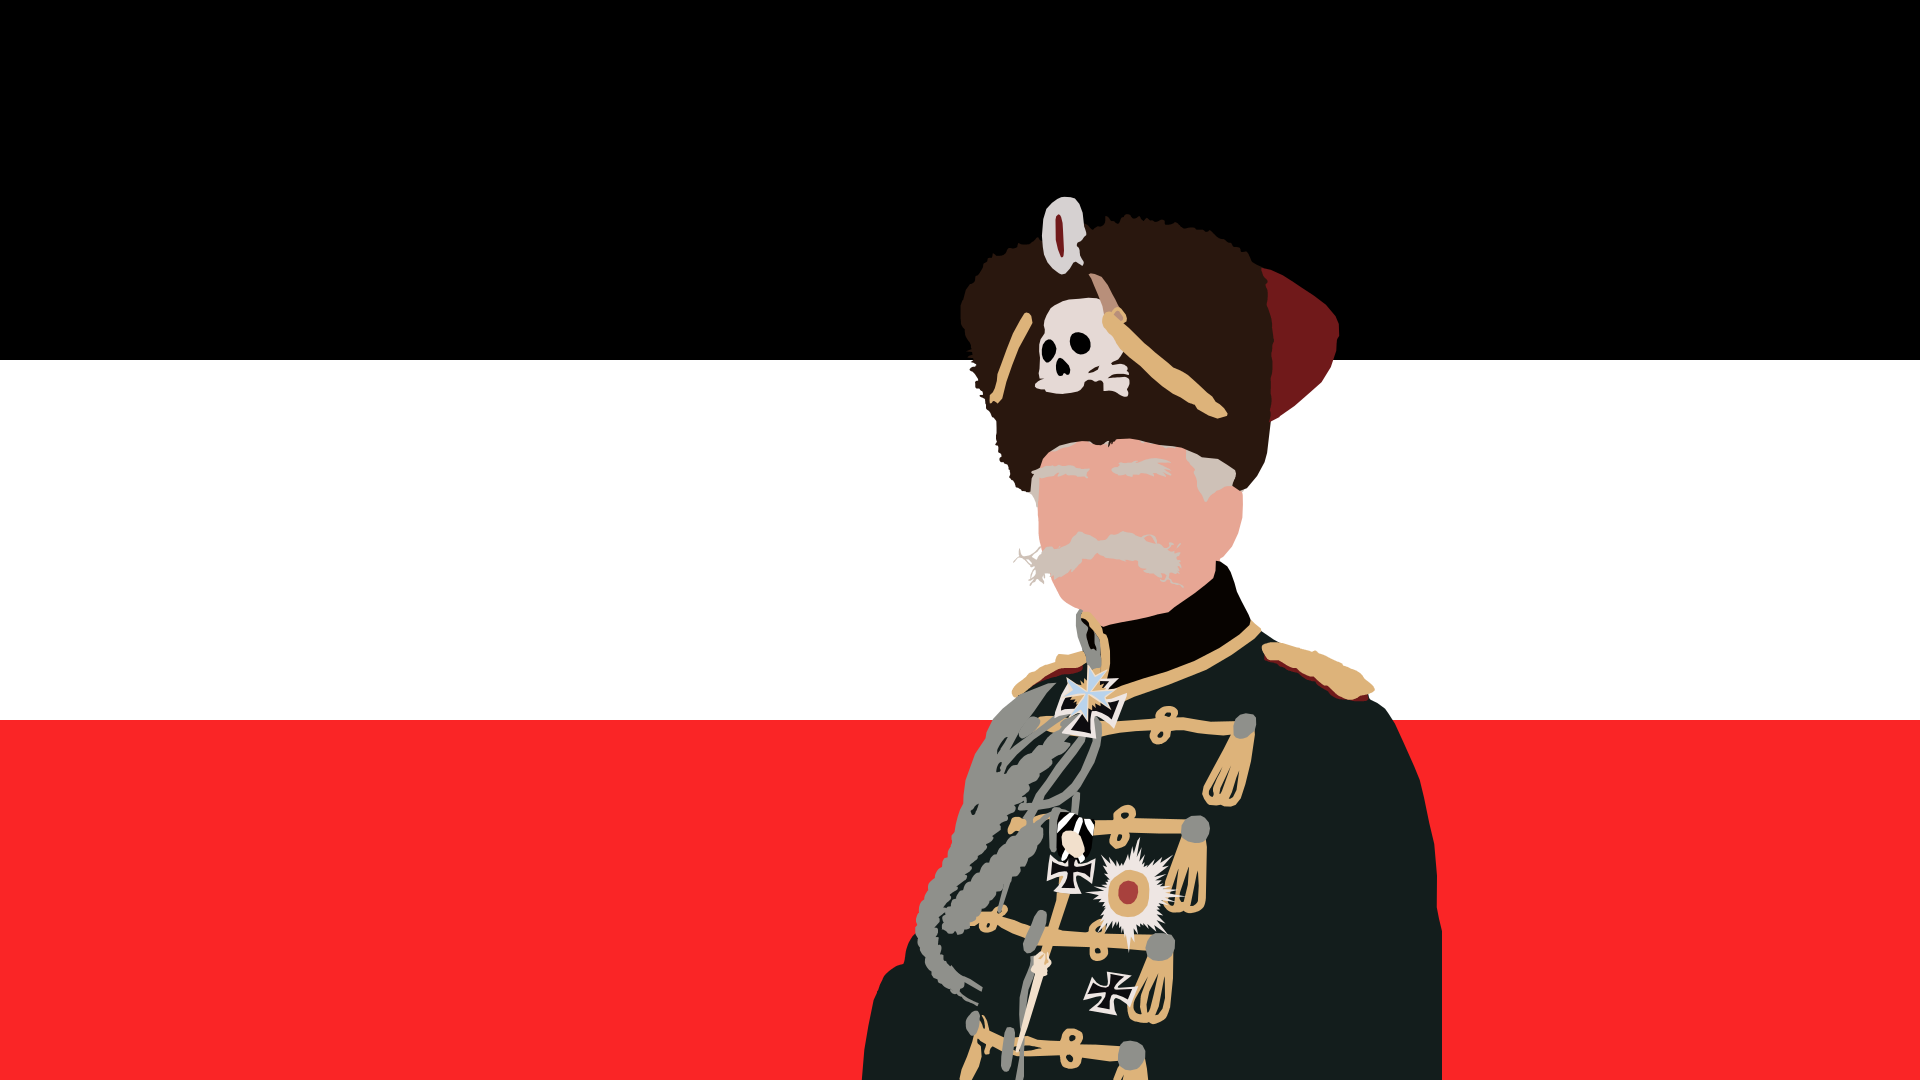 General 1920x1080 military uniform black Iron Cross white red Germany German Empire